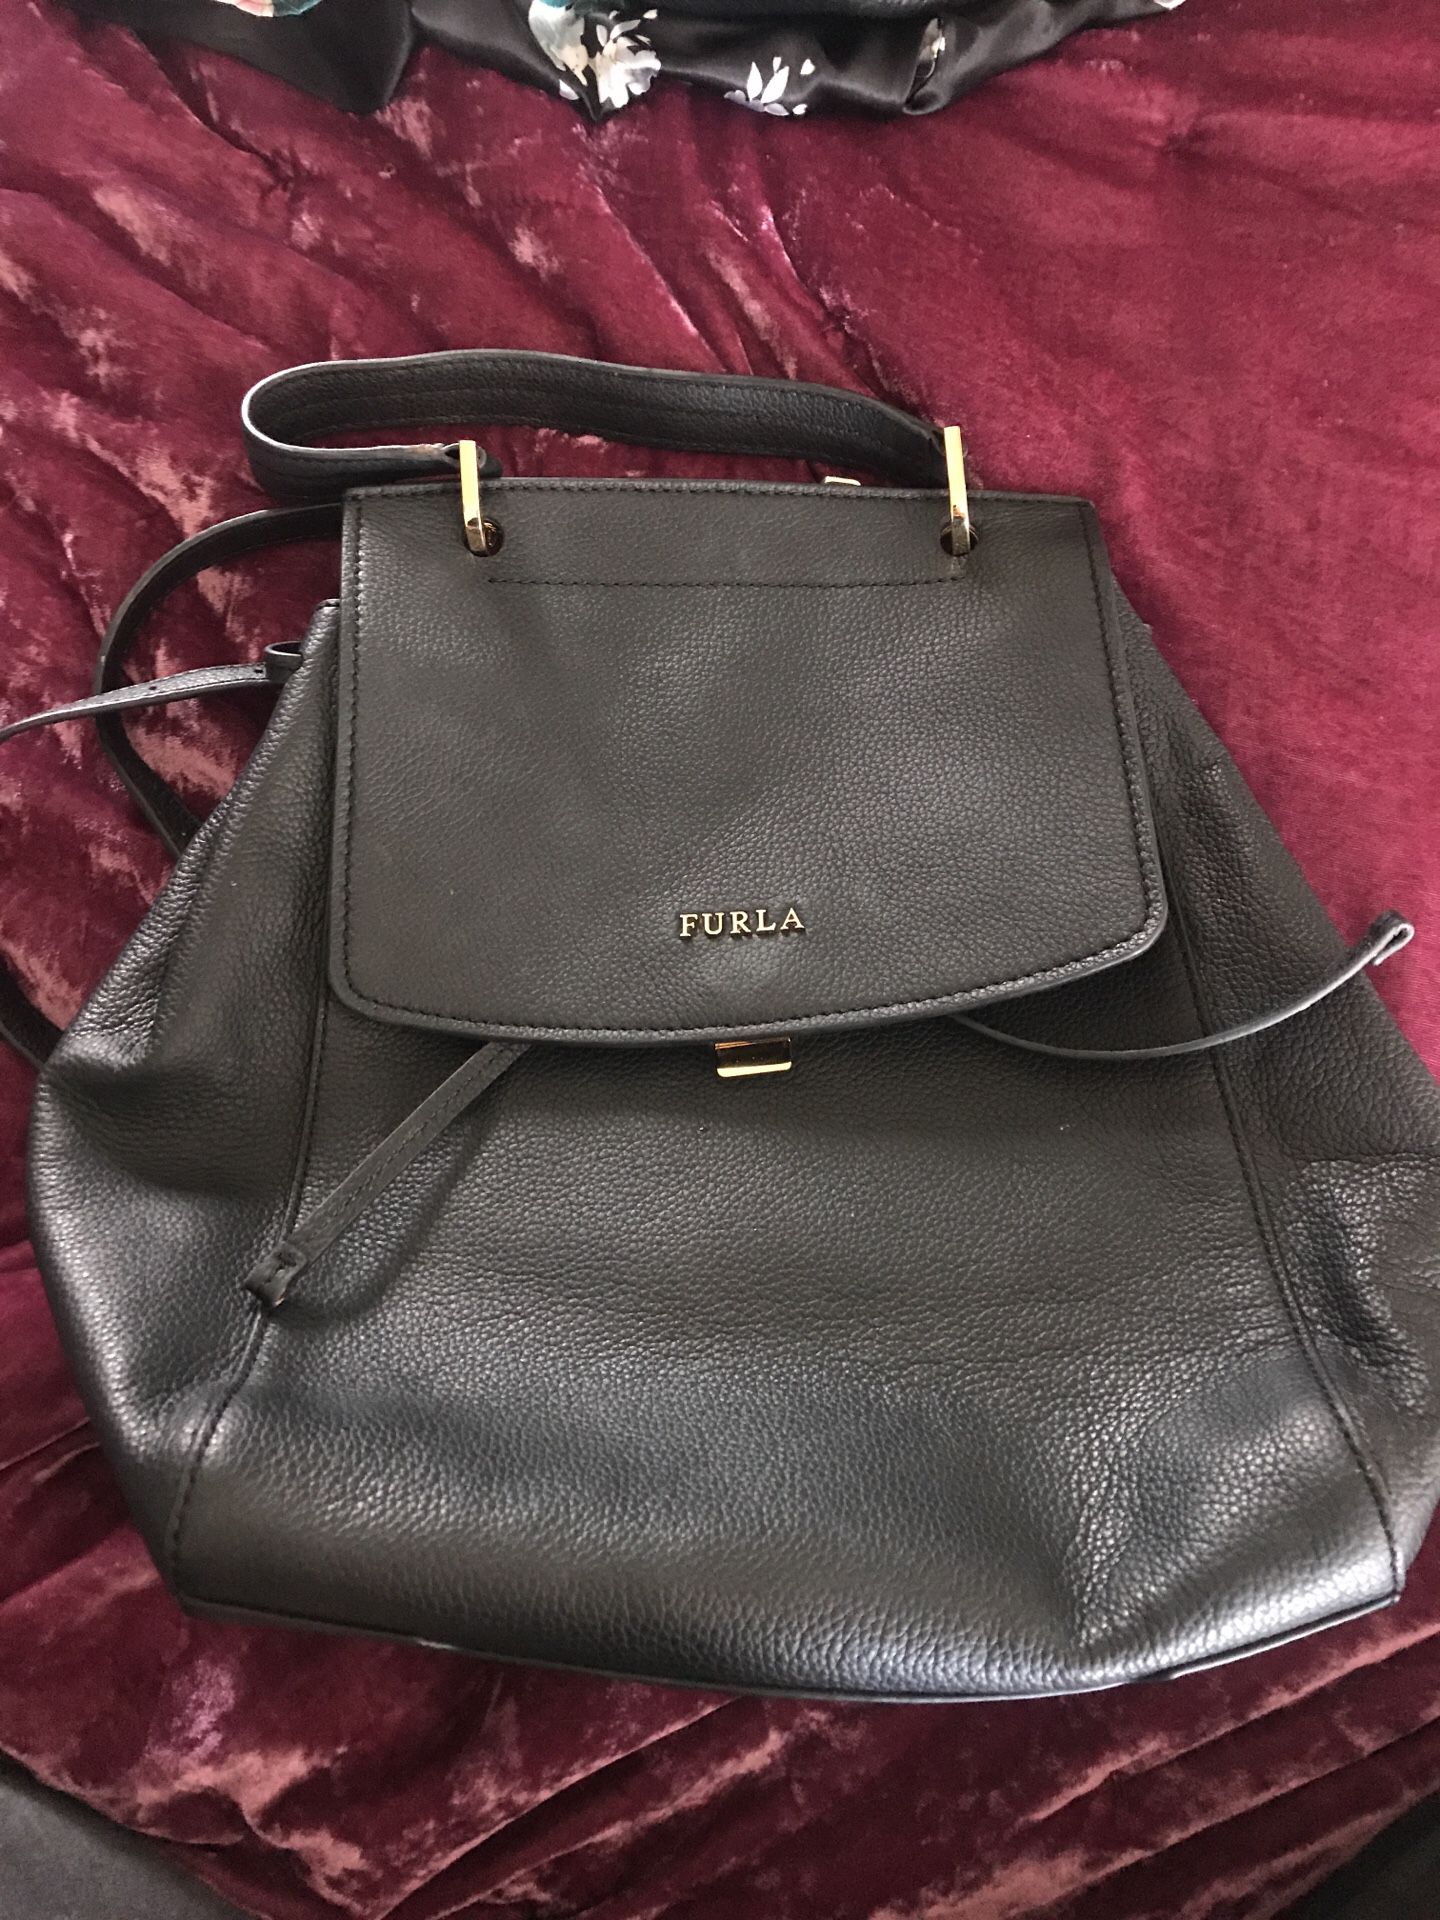 Genuine Italian leather Furla backpack purse